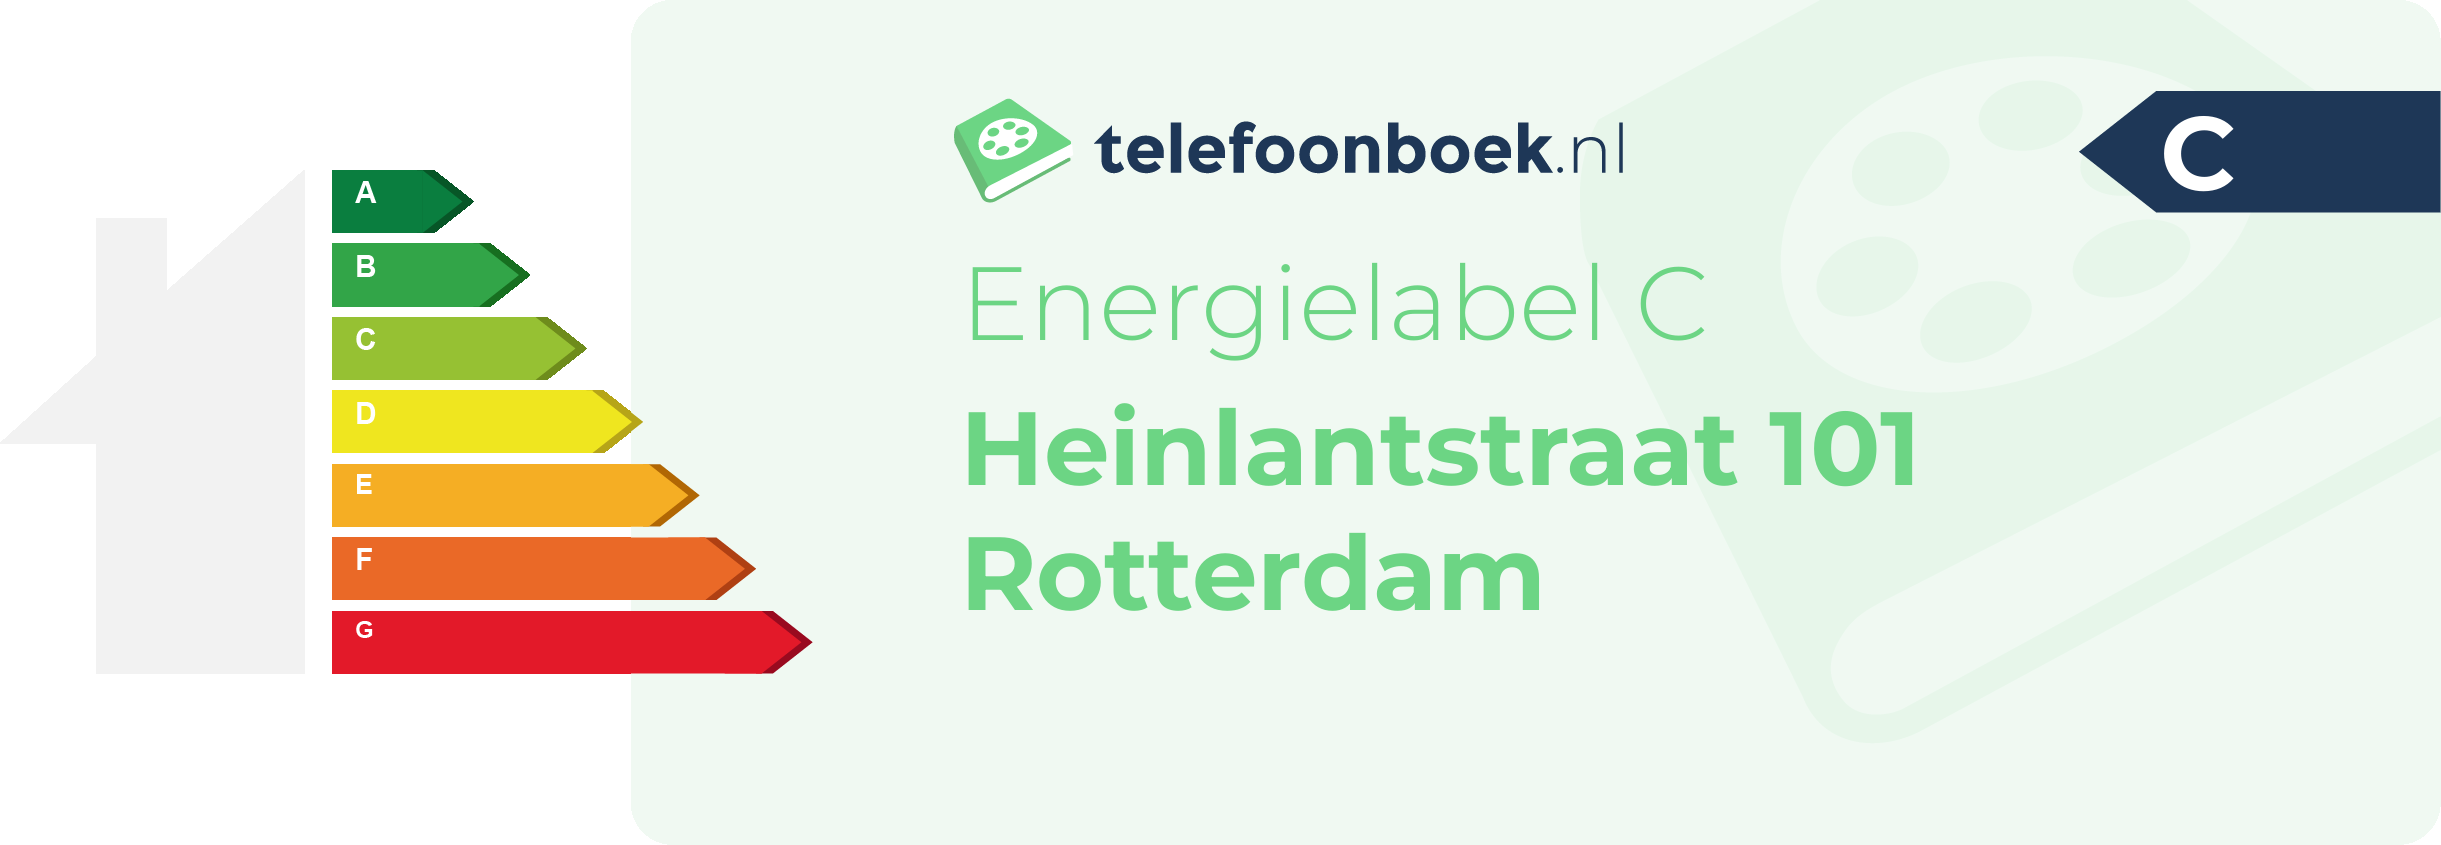 Energielabel Heinlantstraat 101 Rotterdam